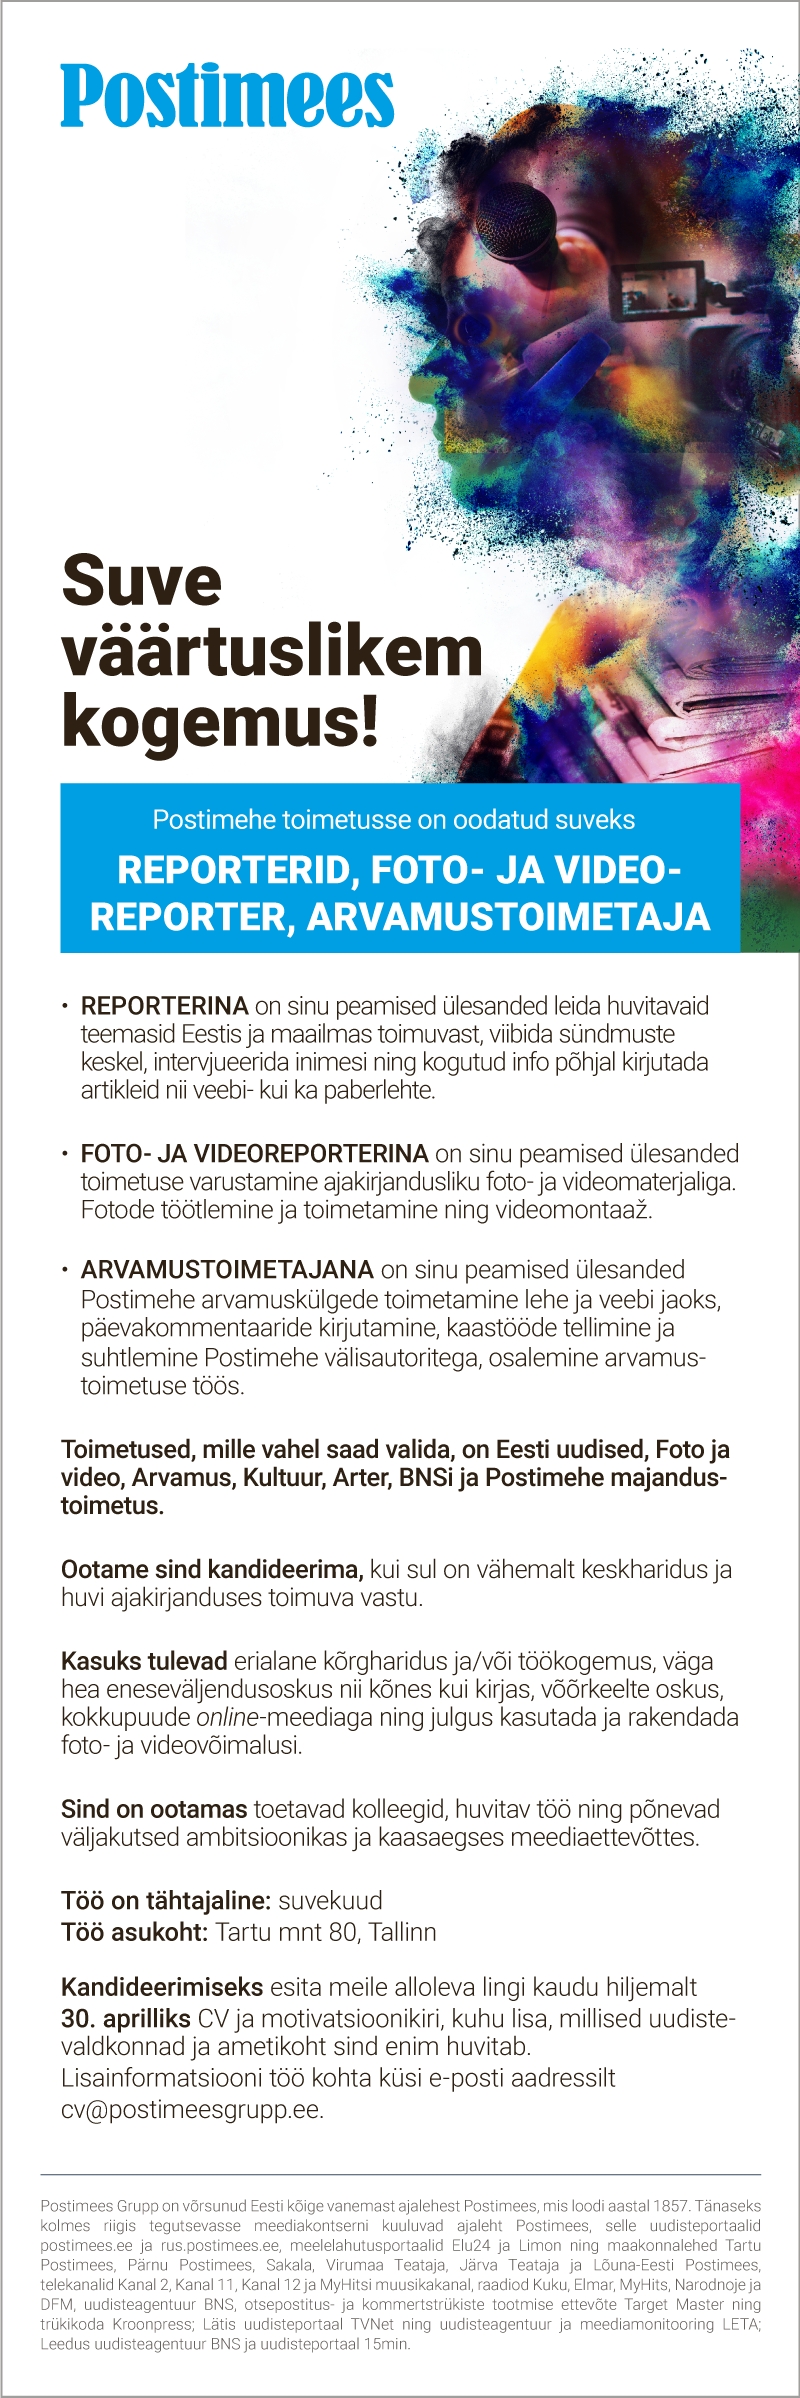 AS Postimees Grupp Suvetöö Postimehes (reporter, foto- ja videoreporter, arvamustoimetaja)